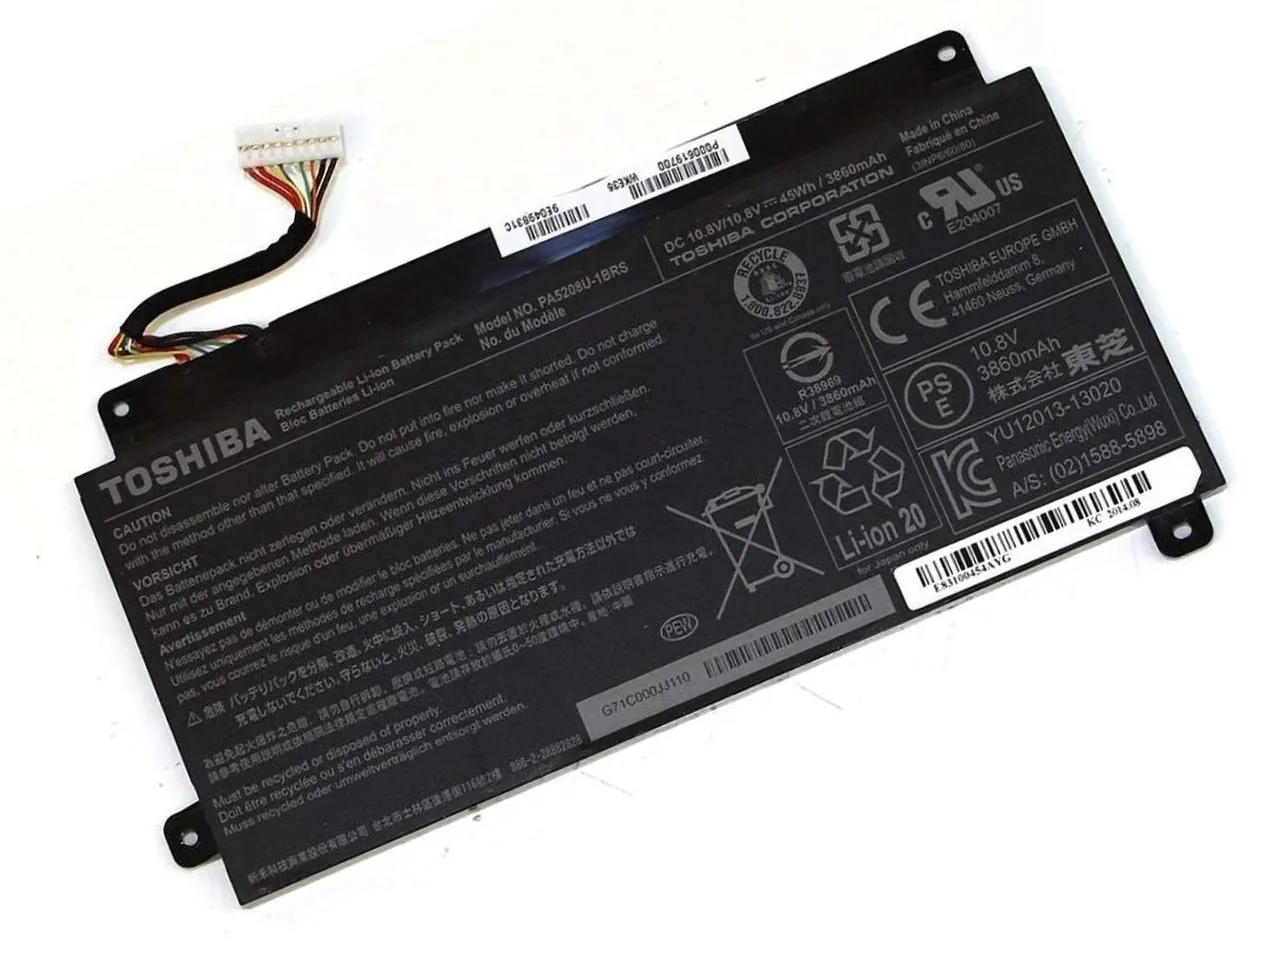 Toshiba PA5208 Internal Battery OEM